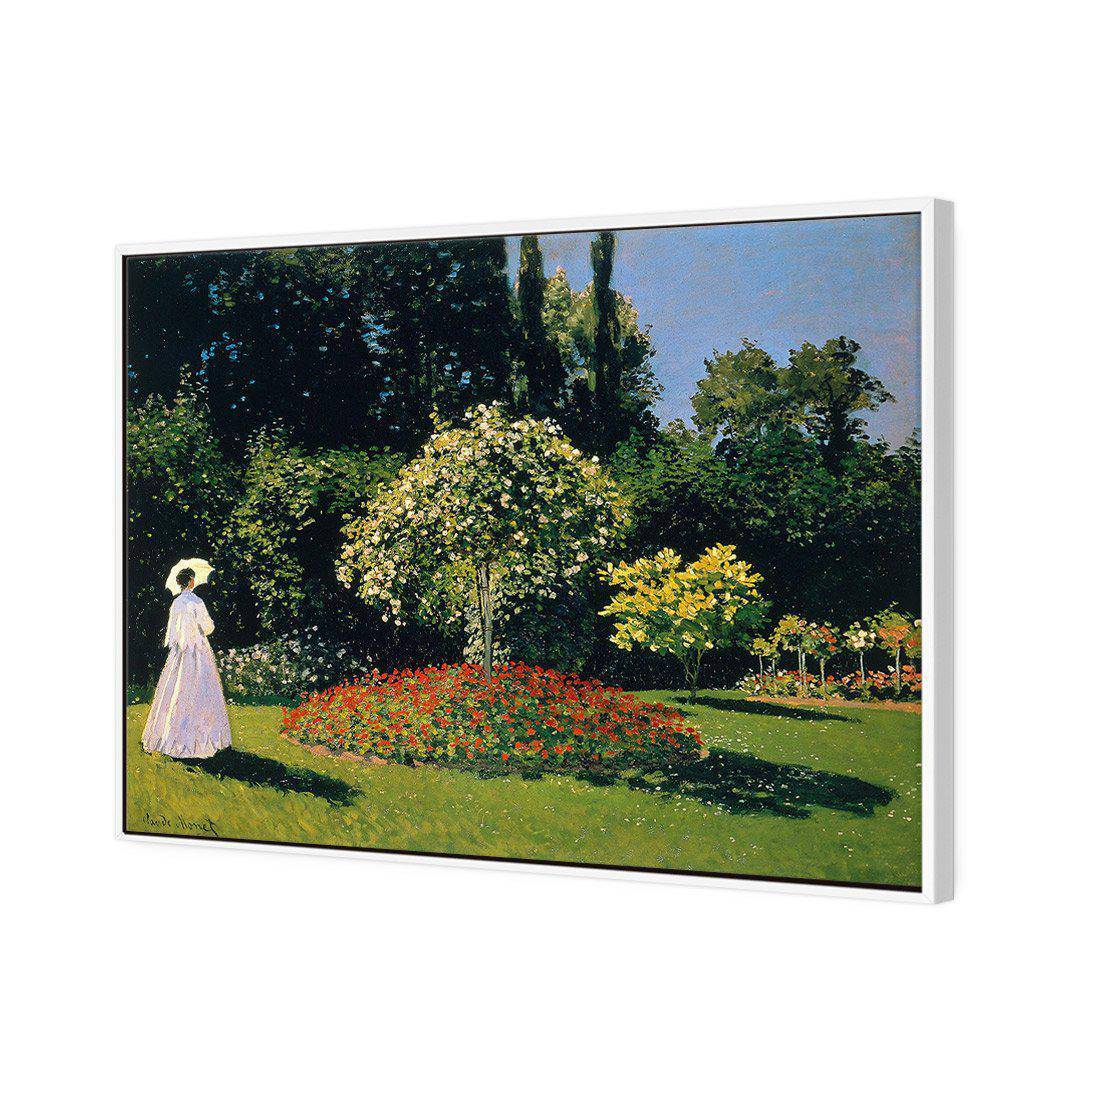 Woman In A Garden - Monet Canvas Art-Canvas-Wall Art Designs-45x30cm-Canvas - White Frame-Wall Art Designs